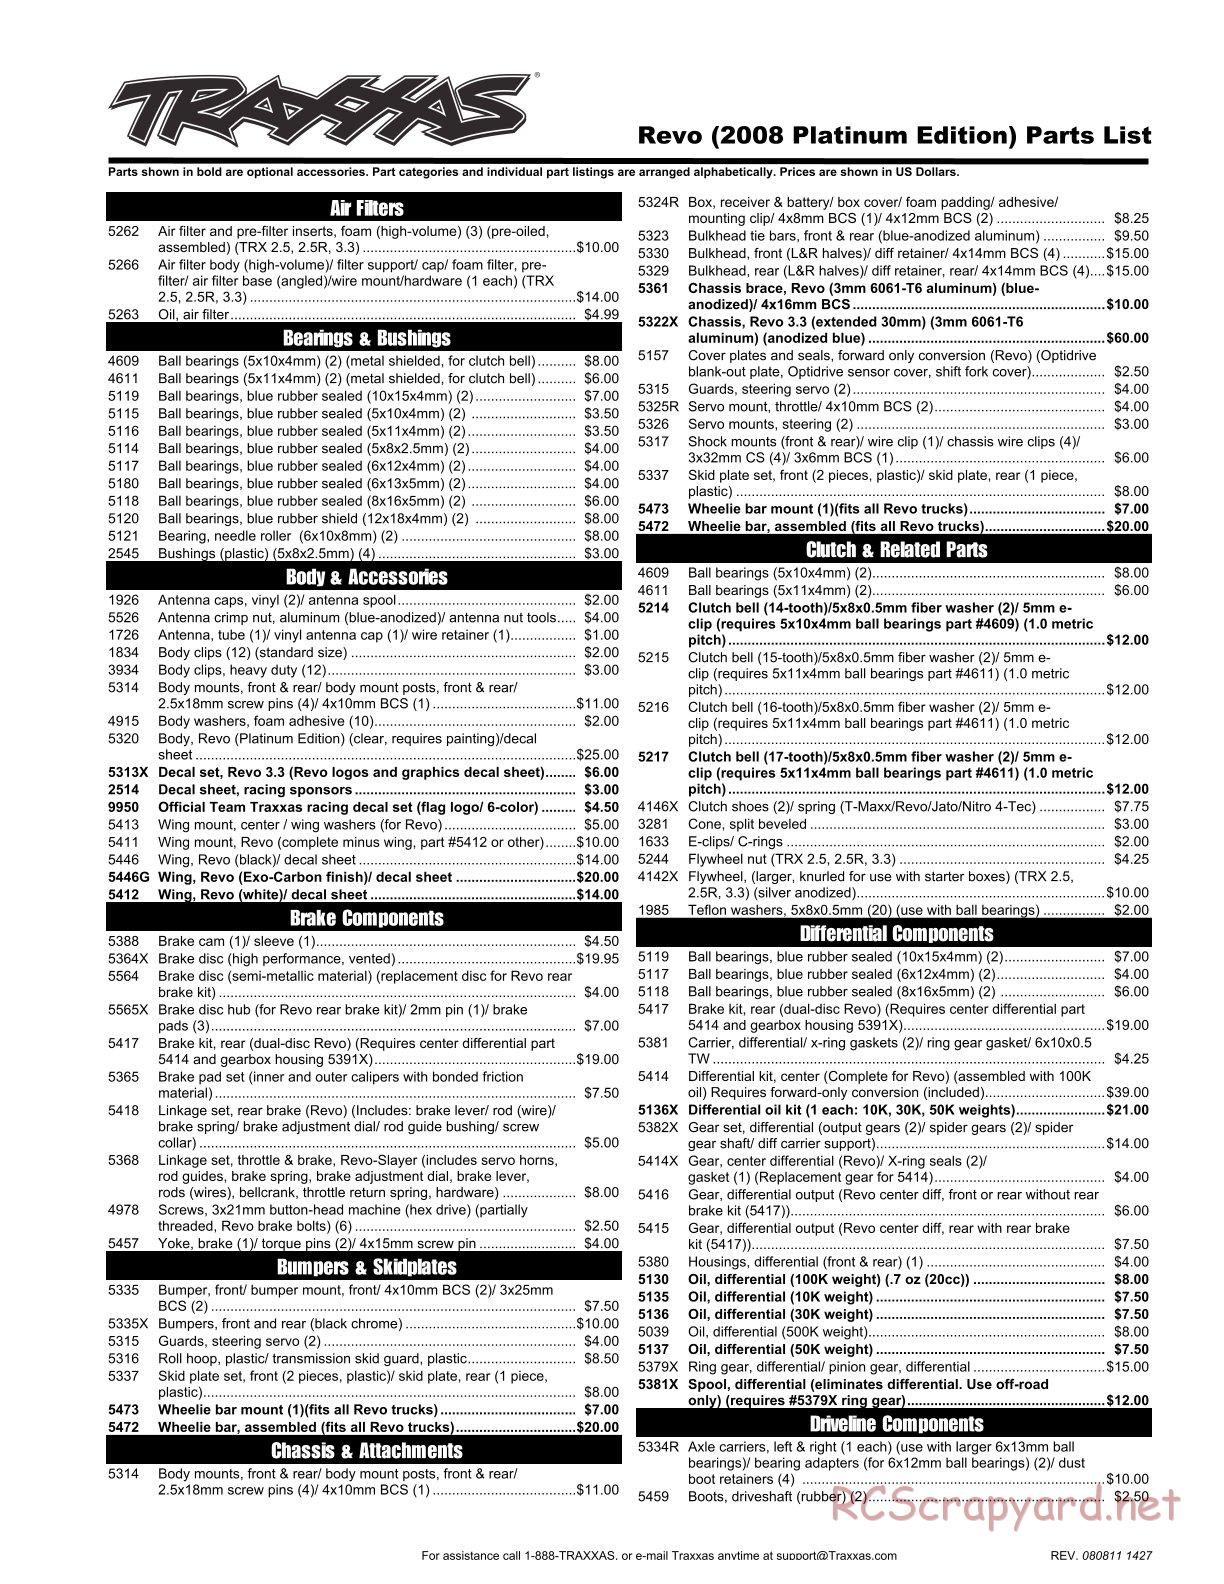 Traxxas - Revo 3.3 (2008) - Parts List - Page 1